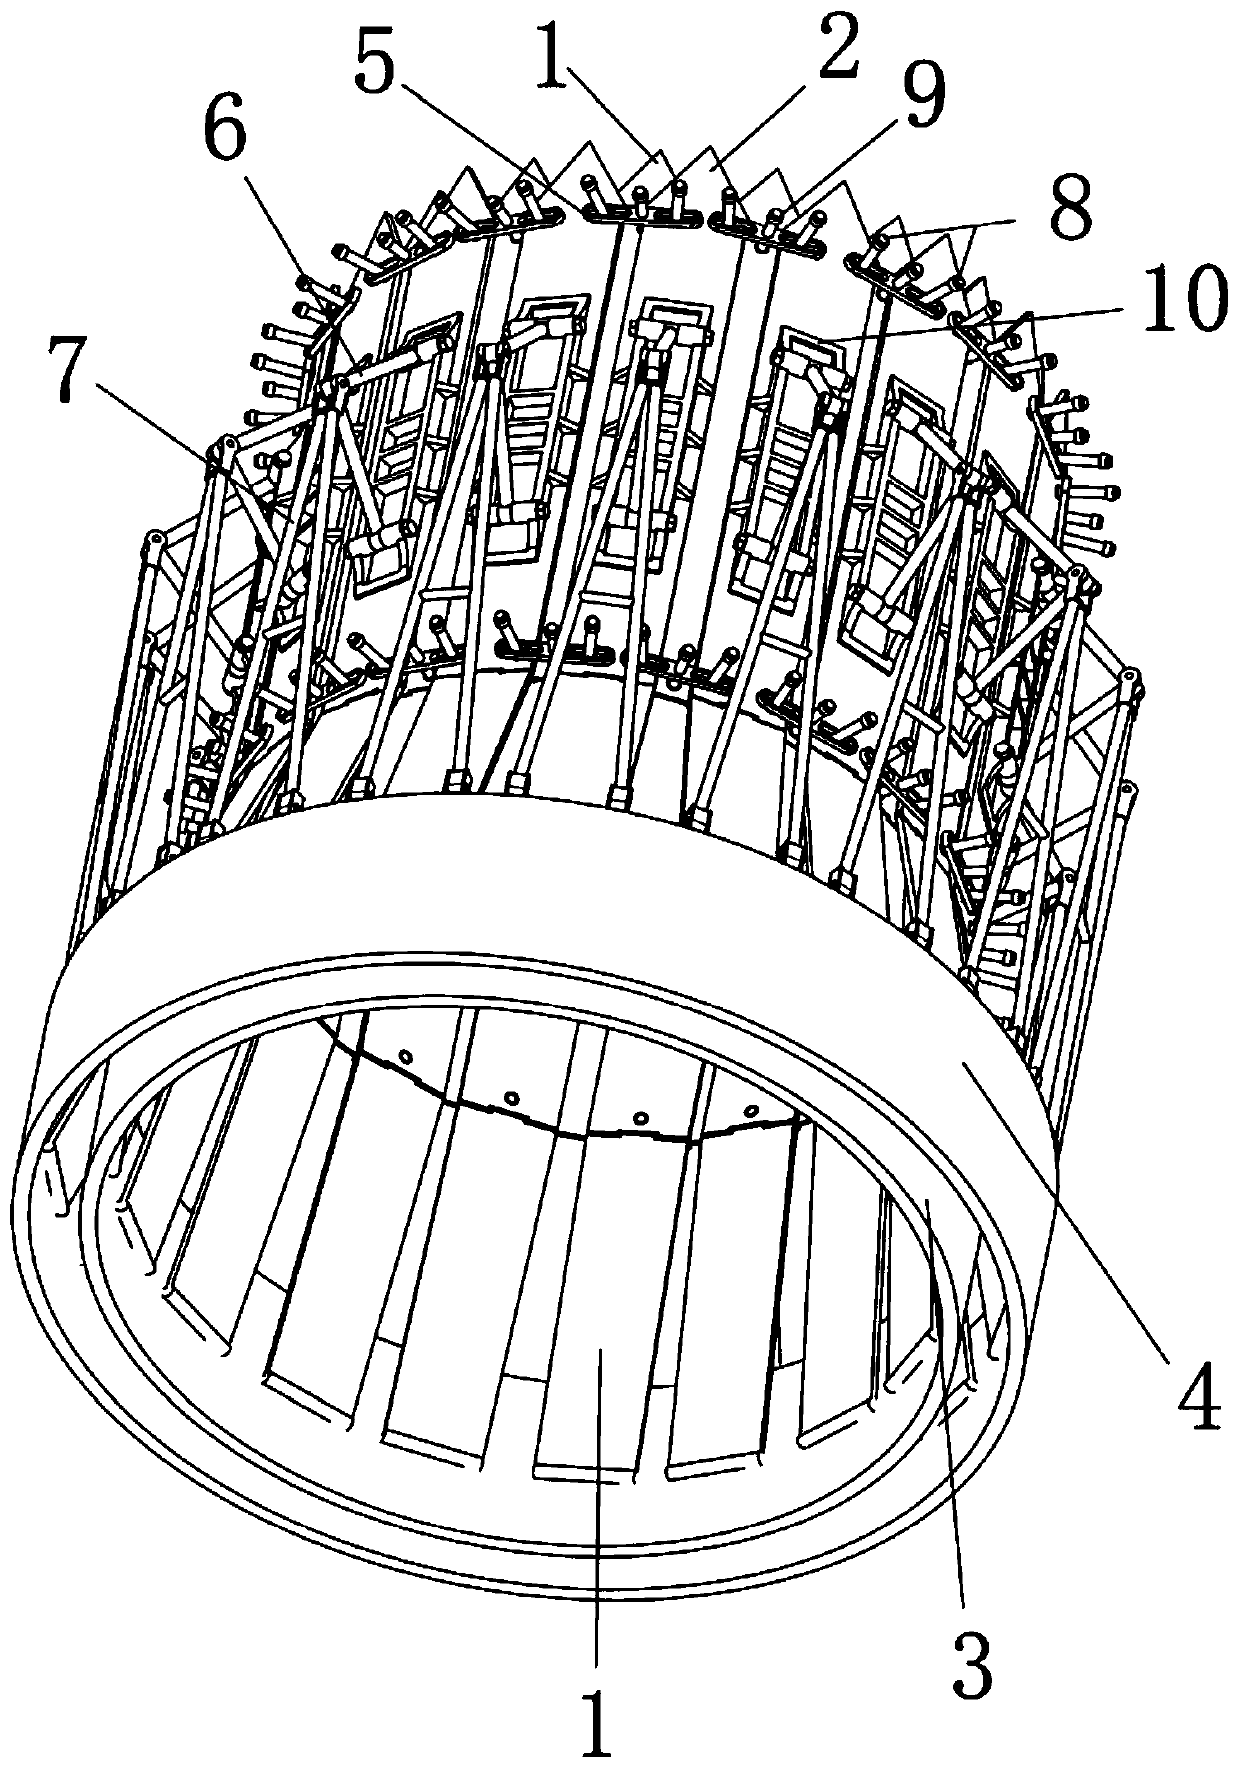 A variable-diameter self-adaptive rotary cutting banana comb cutter